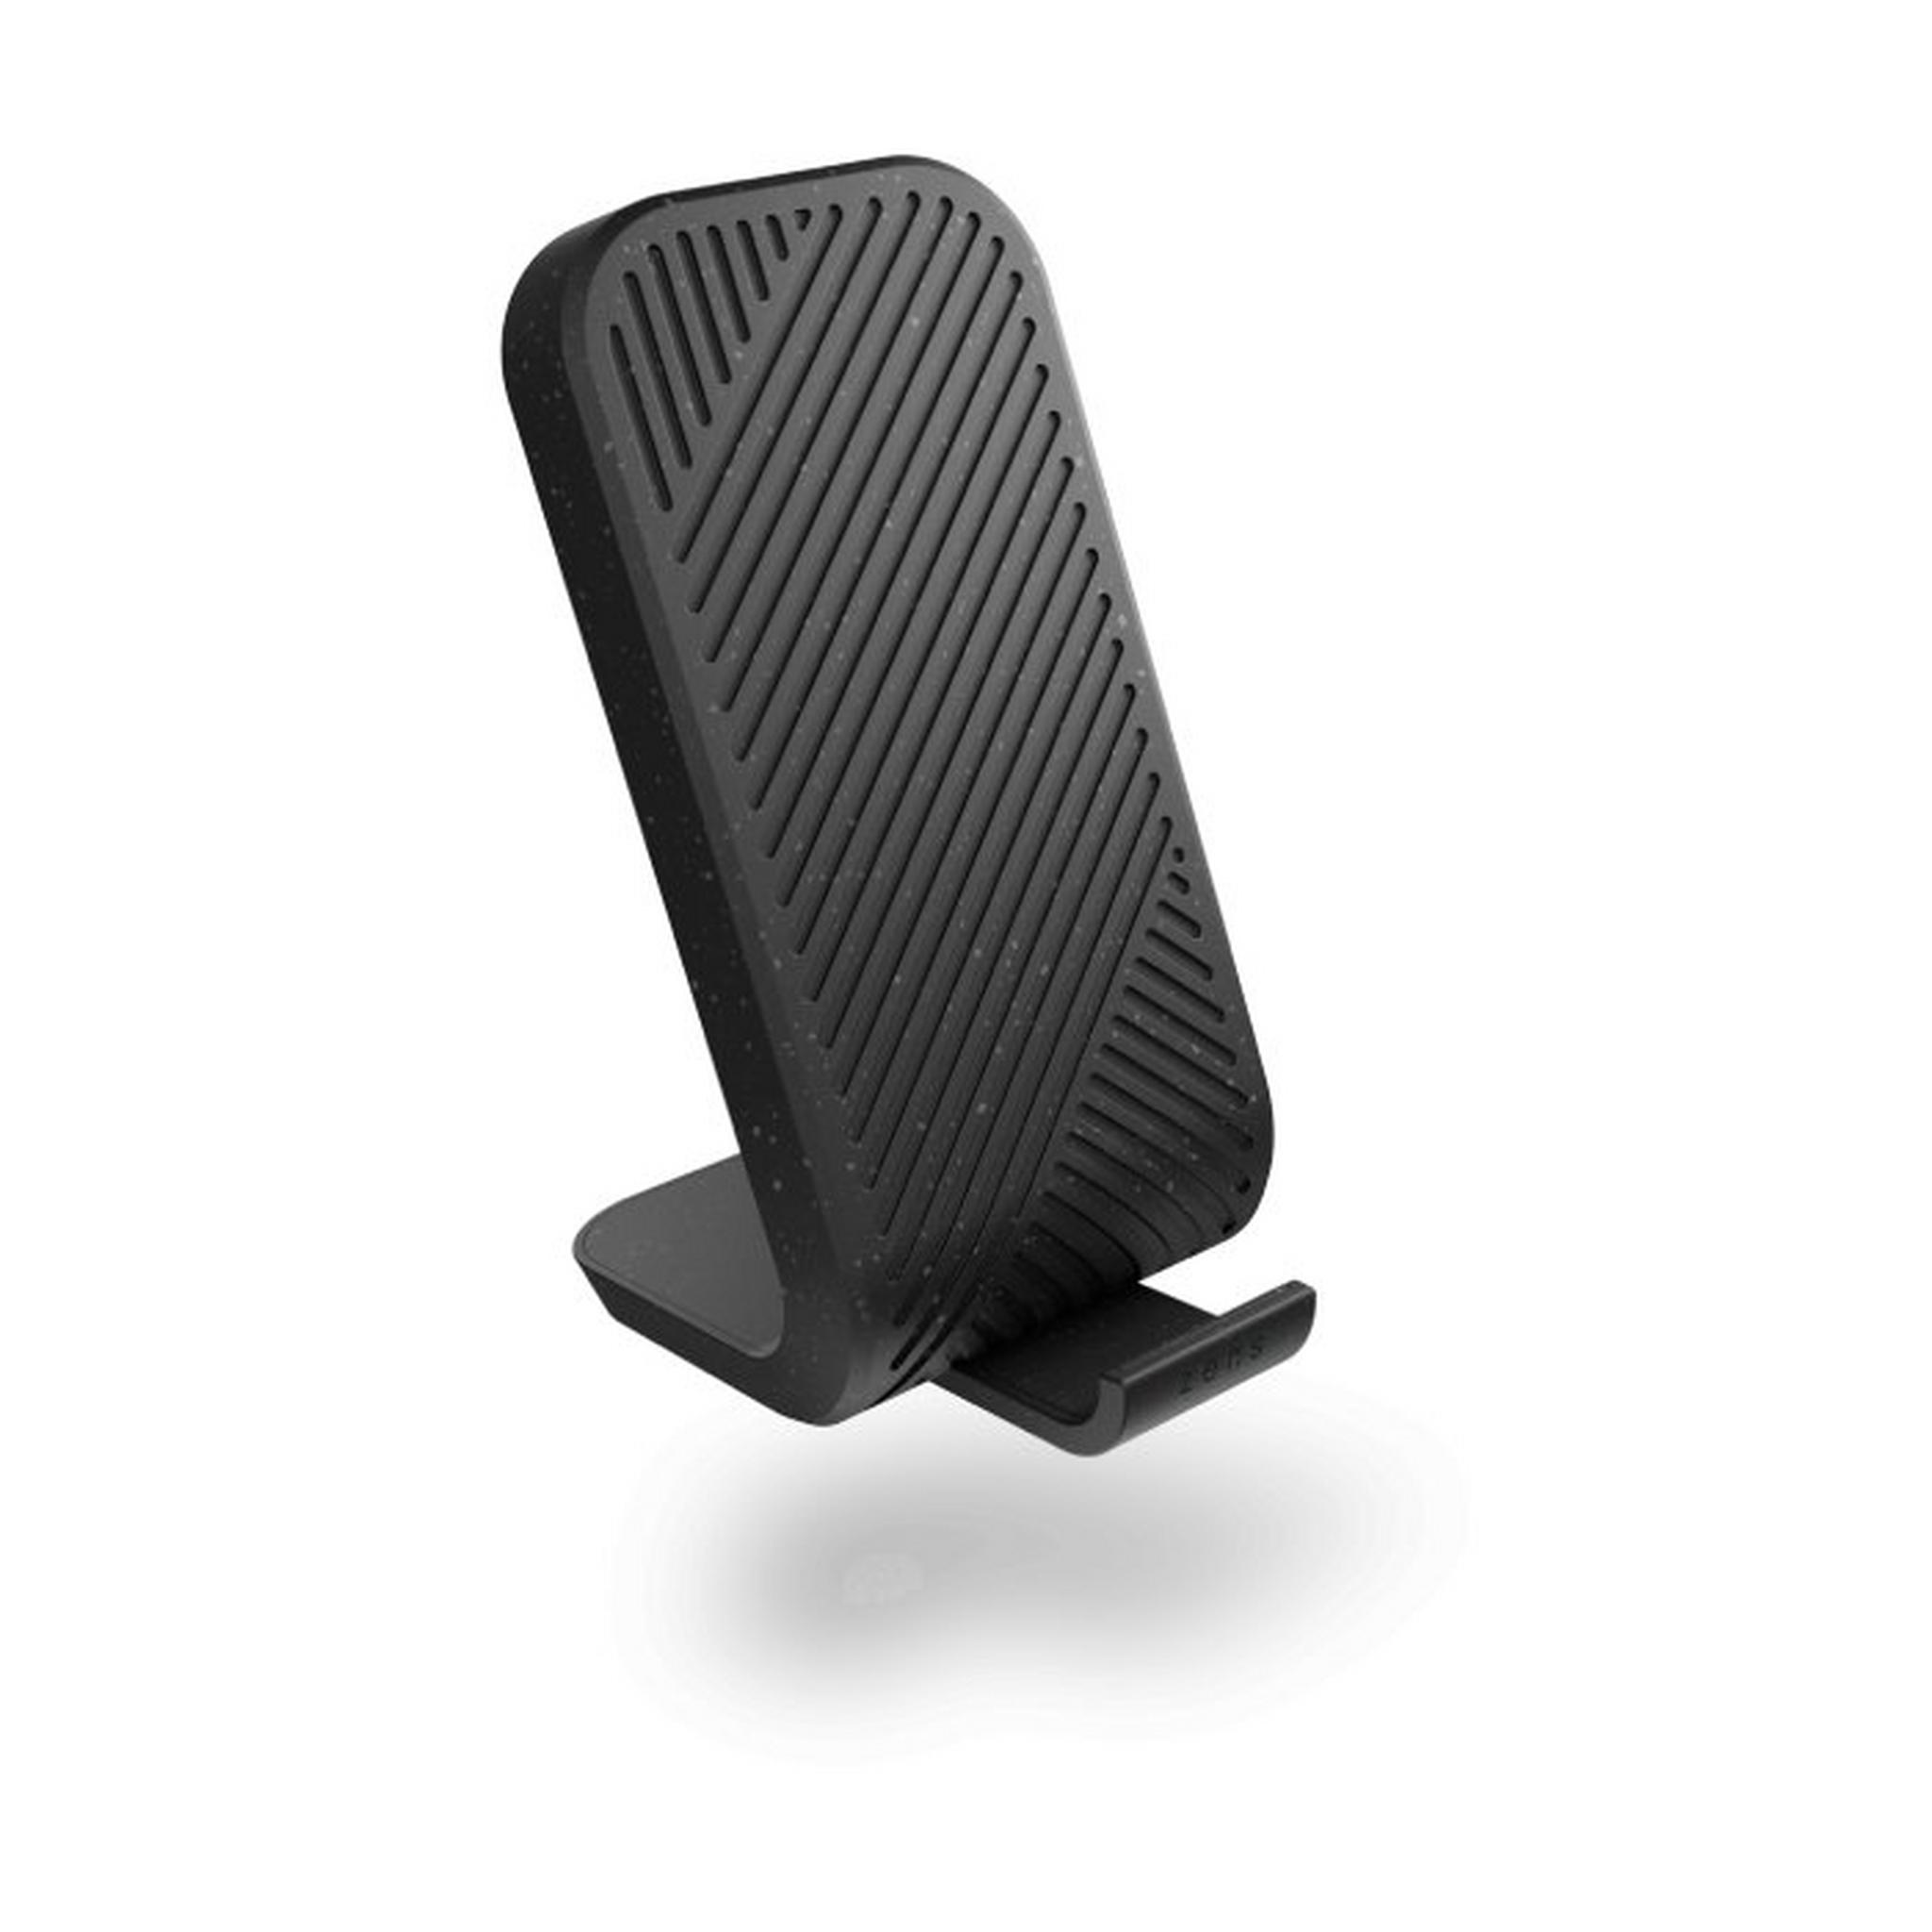 ZENS Stand Wireless Charger, ZEMSC2P/00 – Black